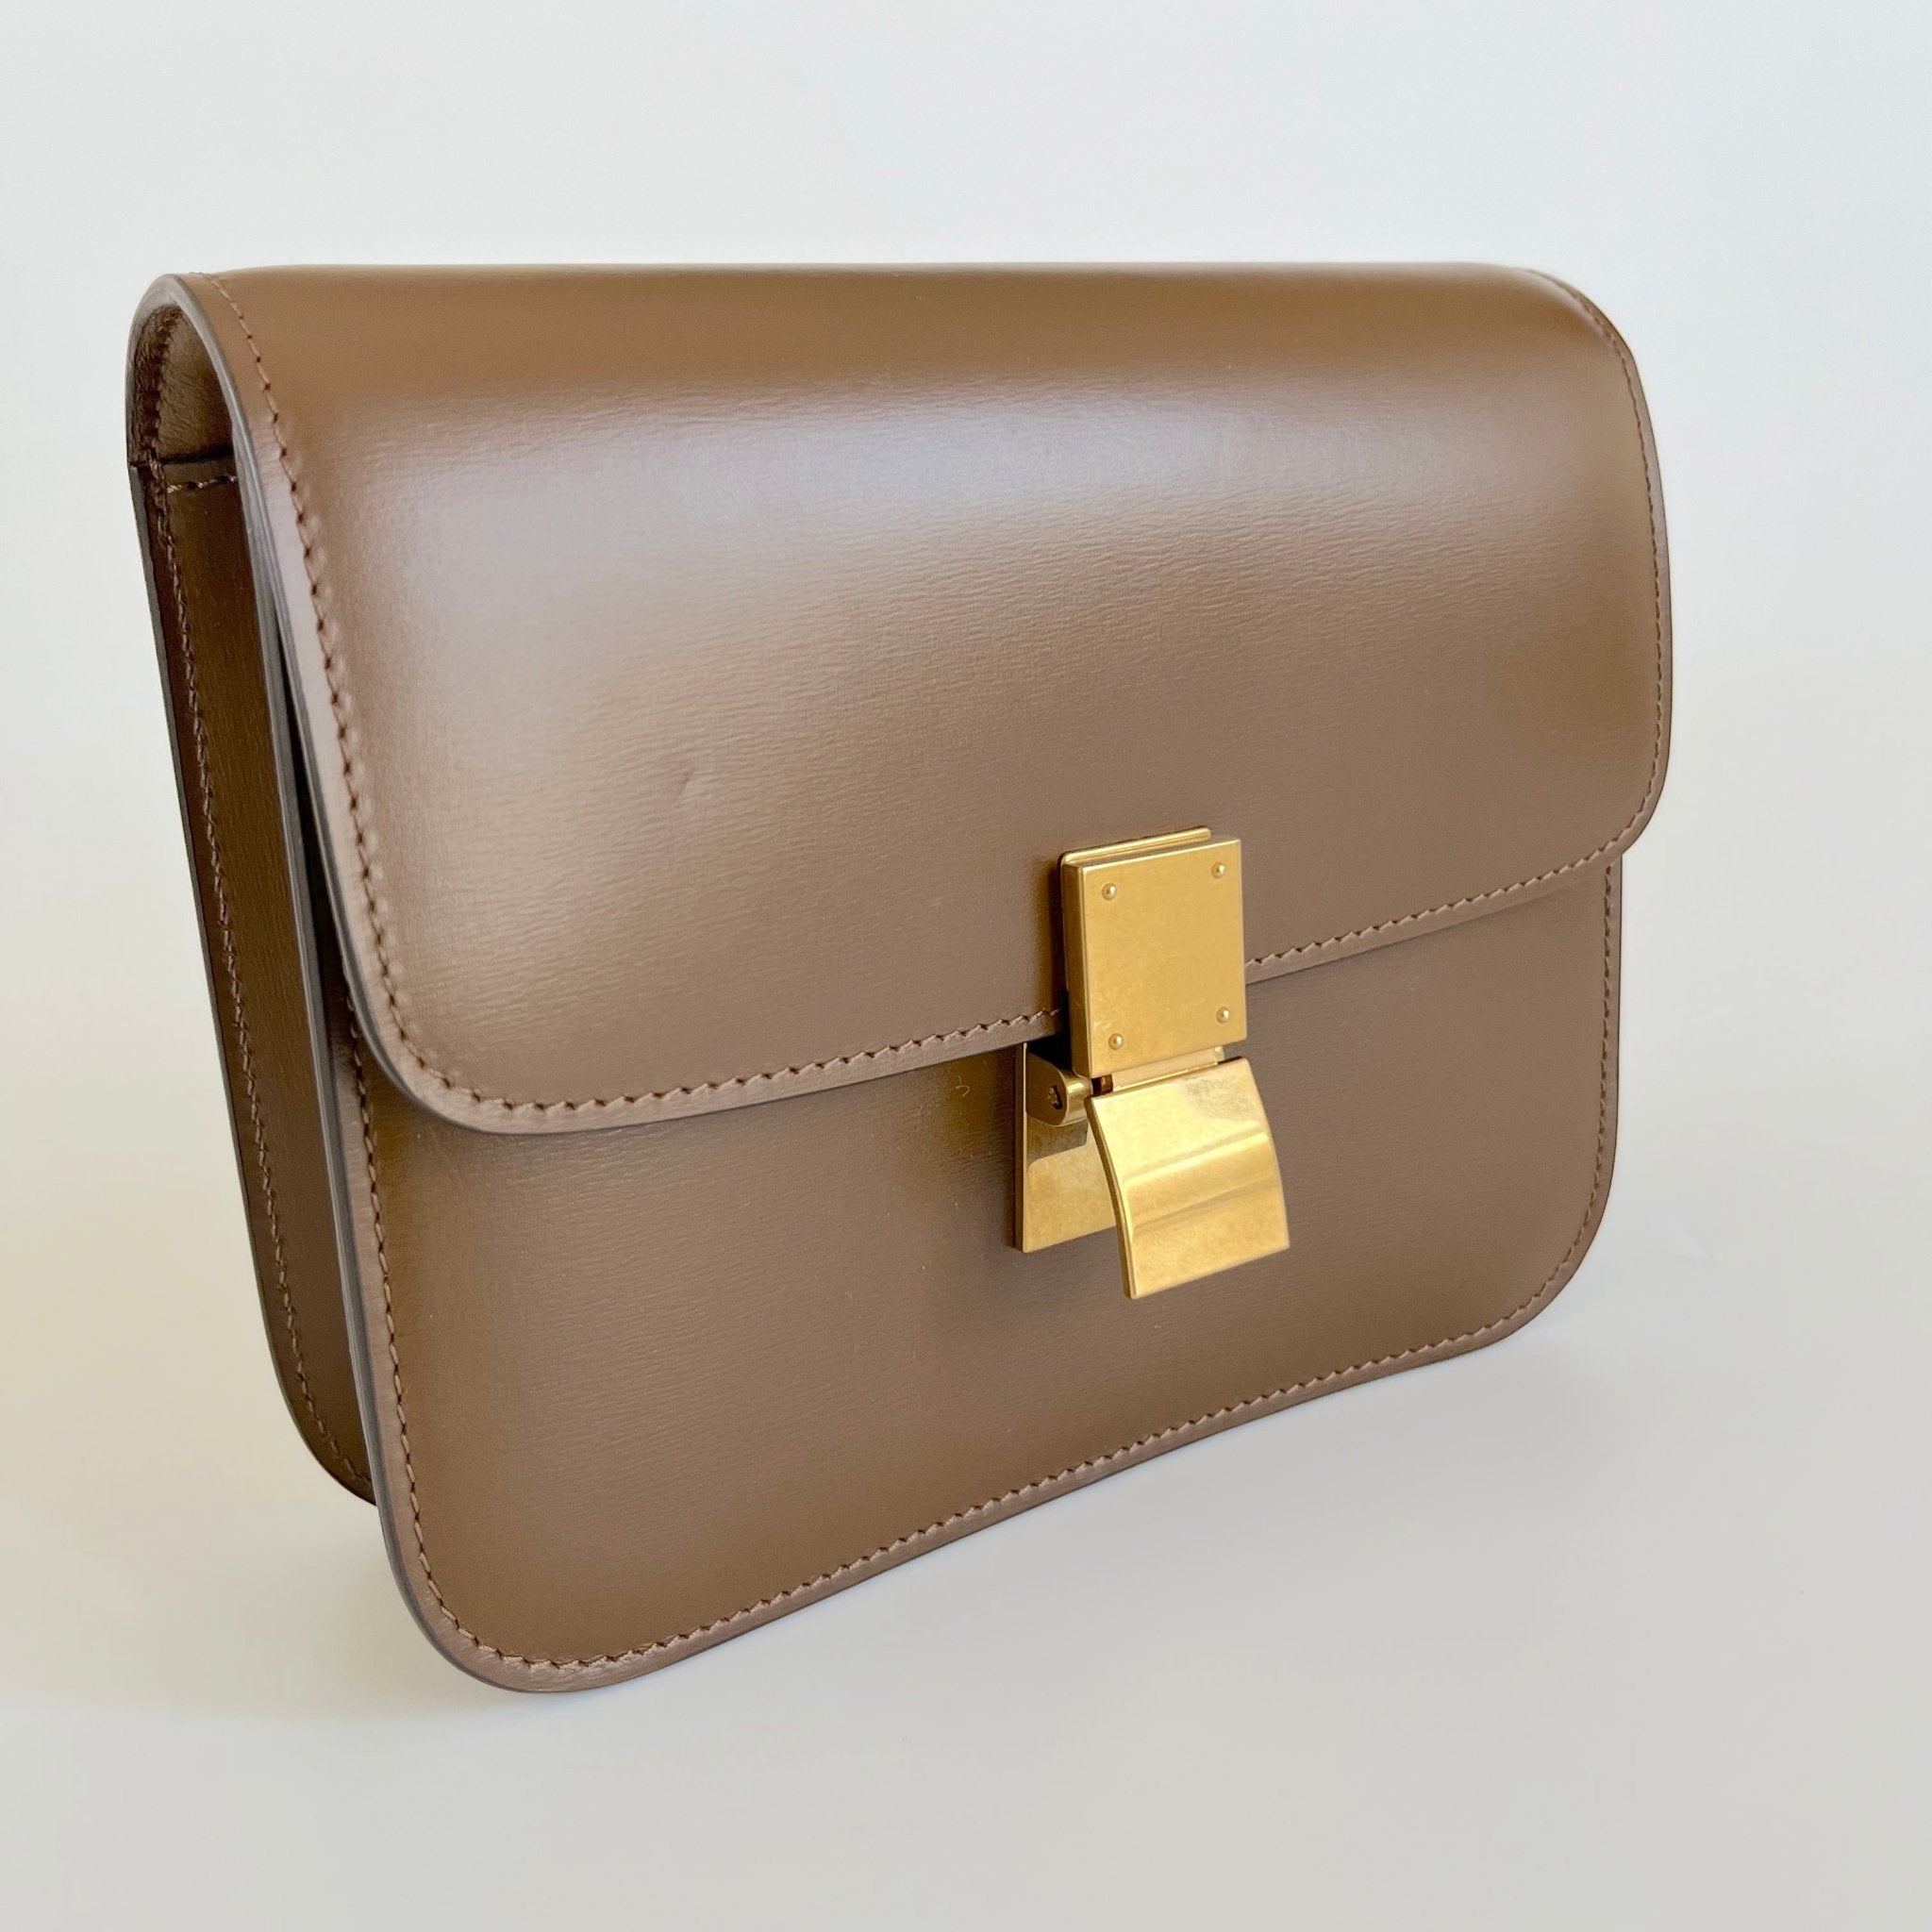 Celine Celadon Smooth Leather Teen Box Bag